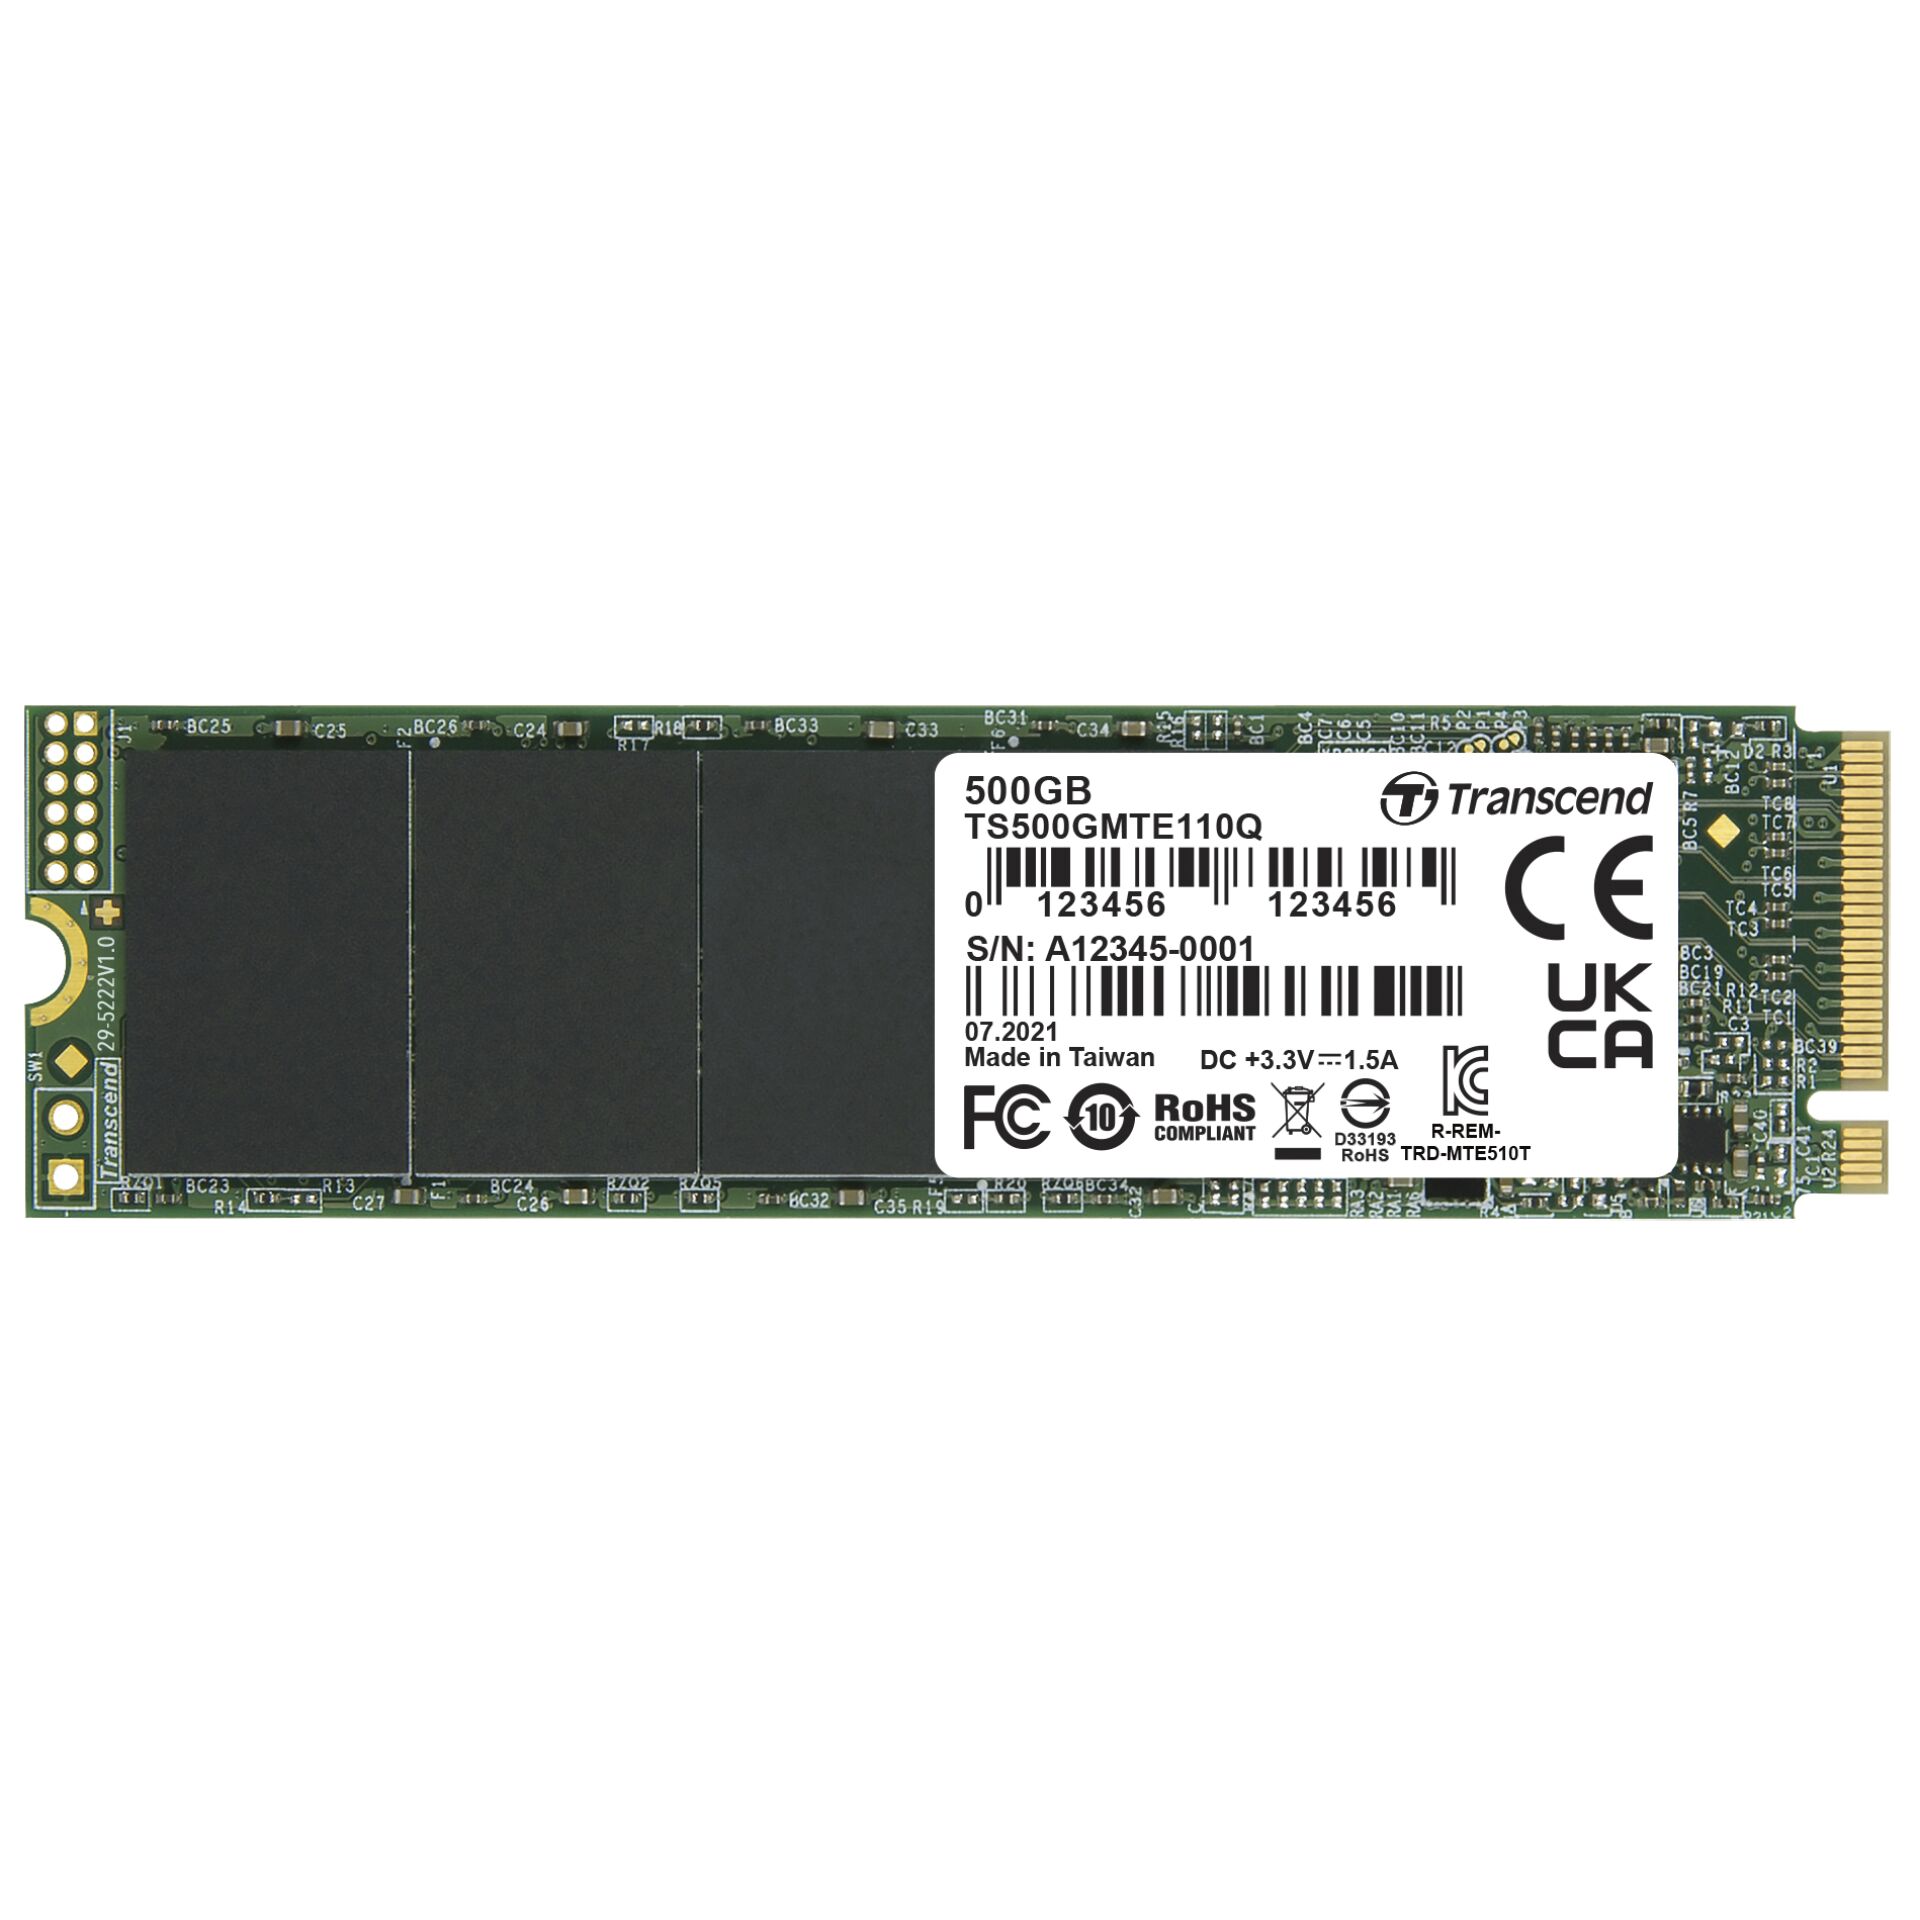 Transcend SSD MTE110Q      500GB NVMe PCIe Gen3 x4